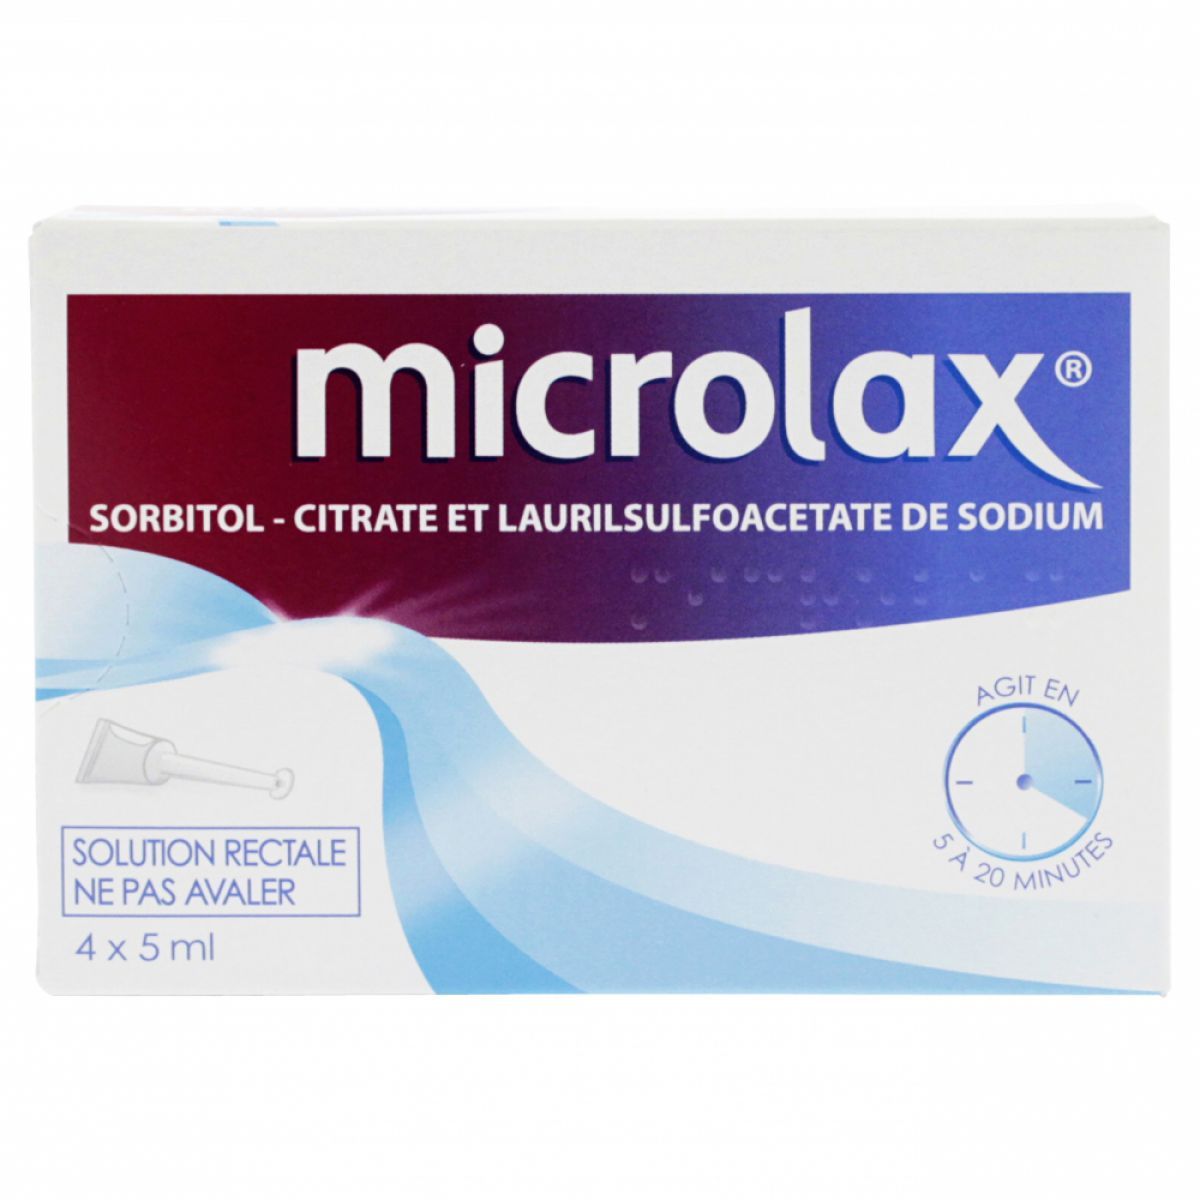 microlax solution rectale adulte unidoses soulage la constipation